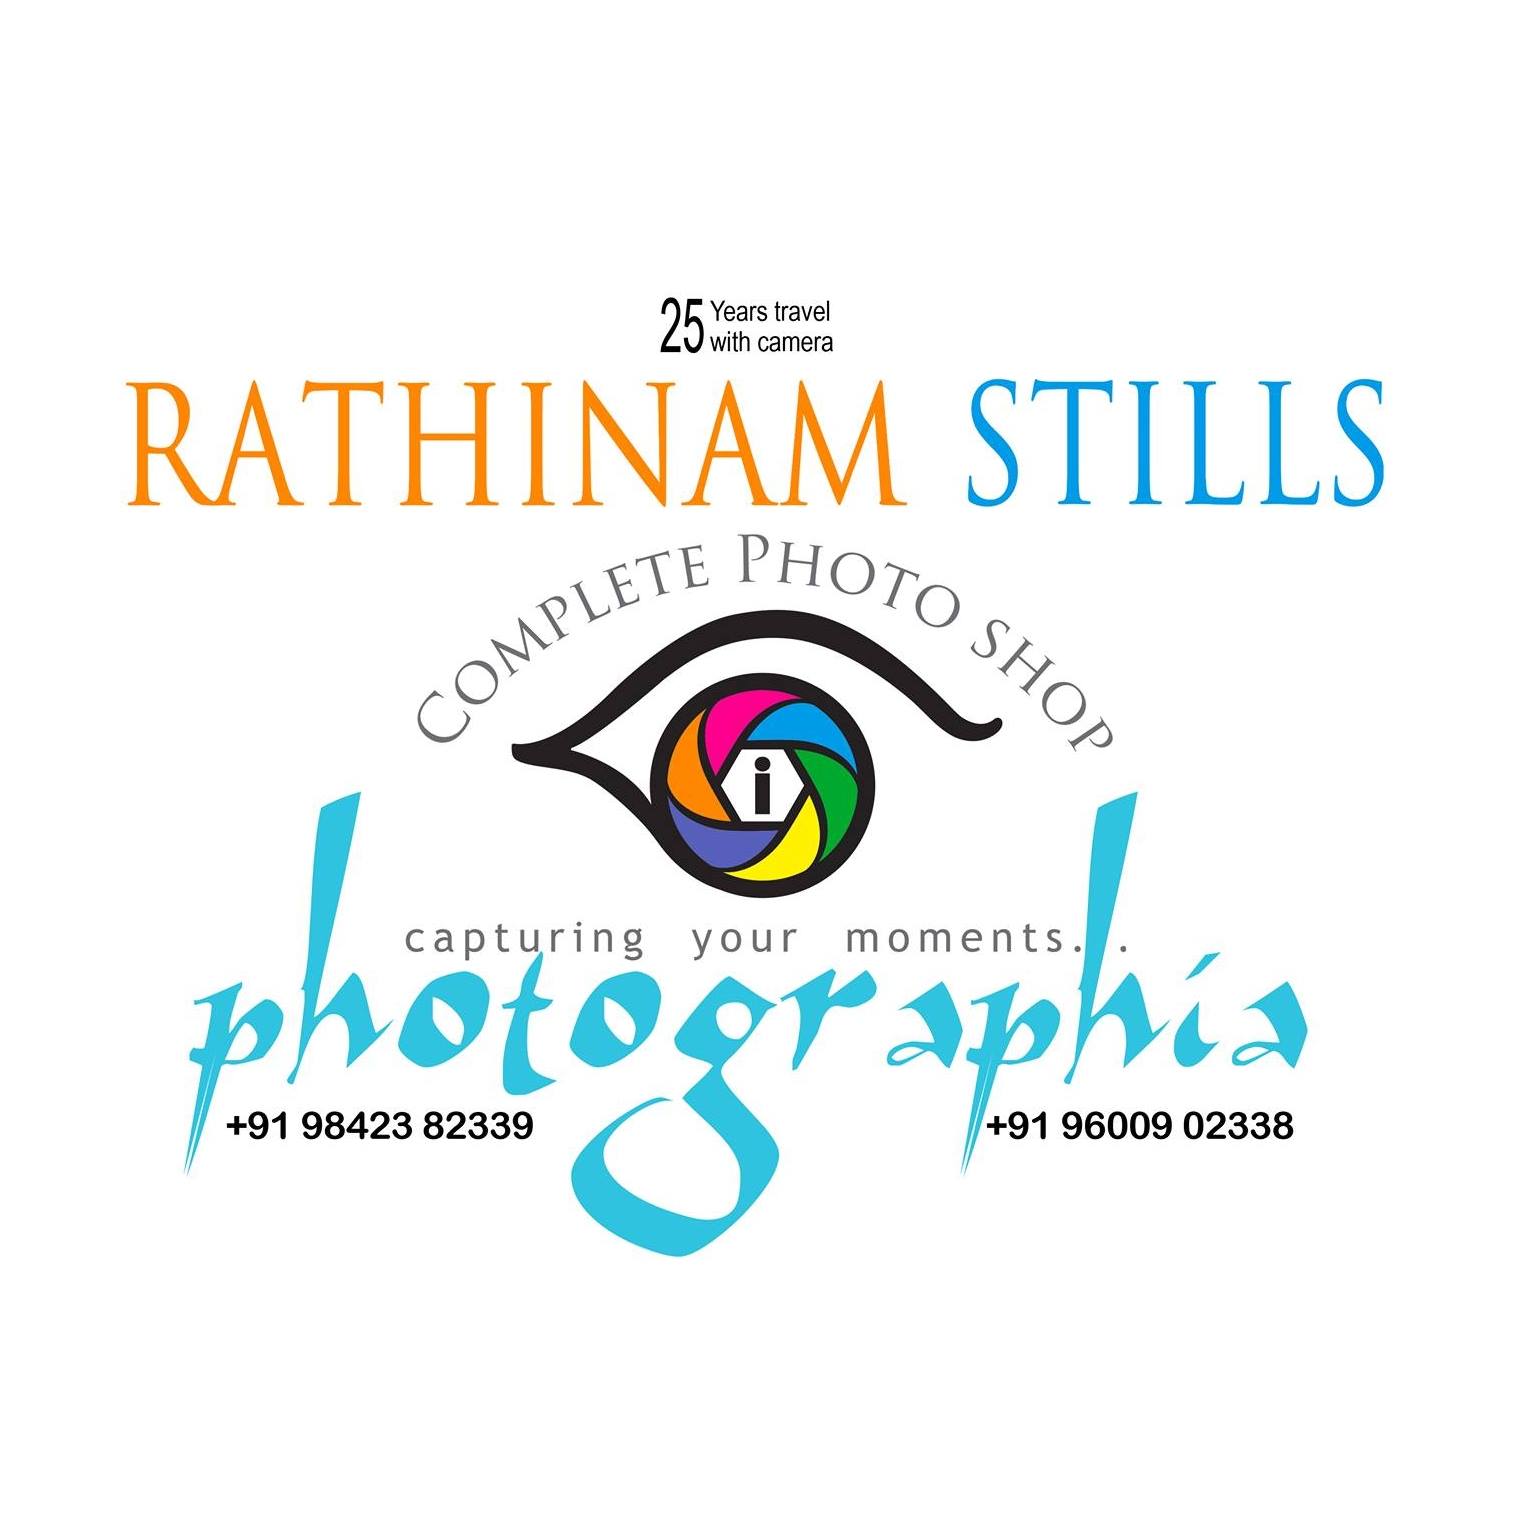 Rathinam Stills Portrait Studio|Photographer|Event Services